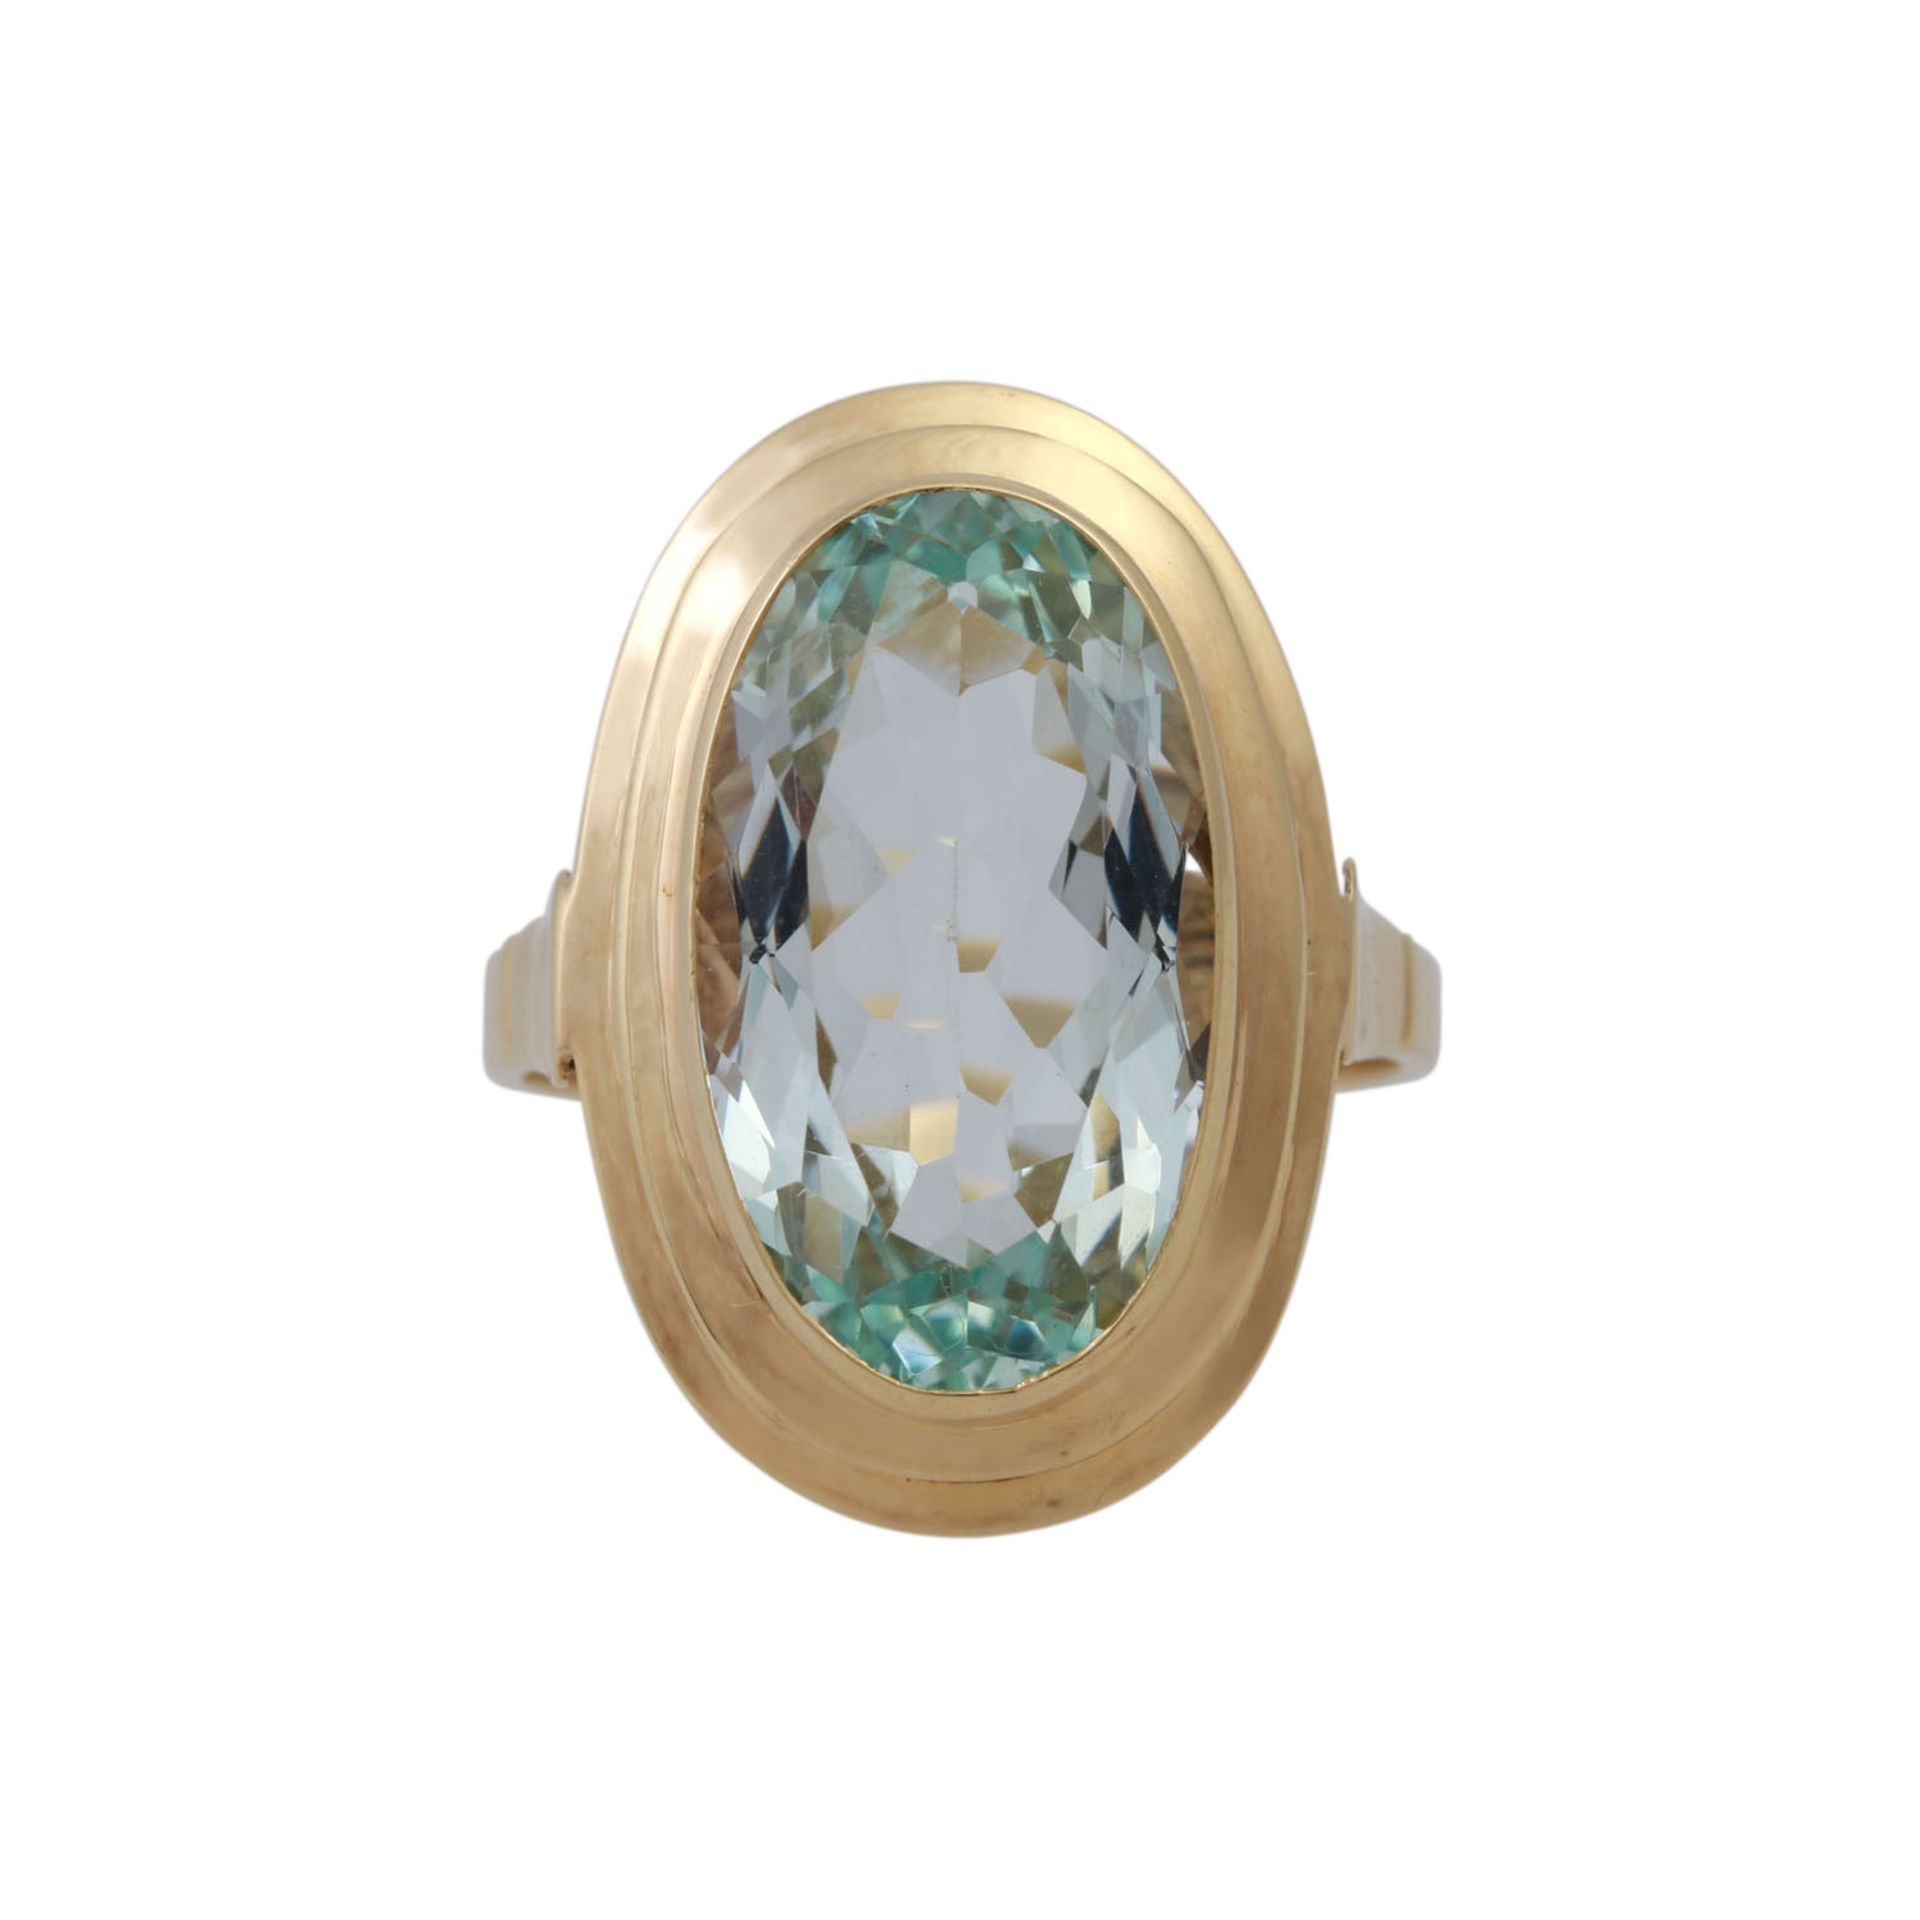 Ring mit oval fac. Aquamarin, ca. 5 ct,13x10x6,5 mm, in hellem grün-blau, augenrein, GG 14K, RW